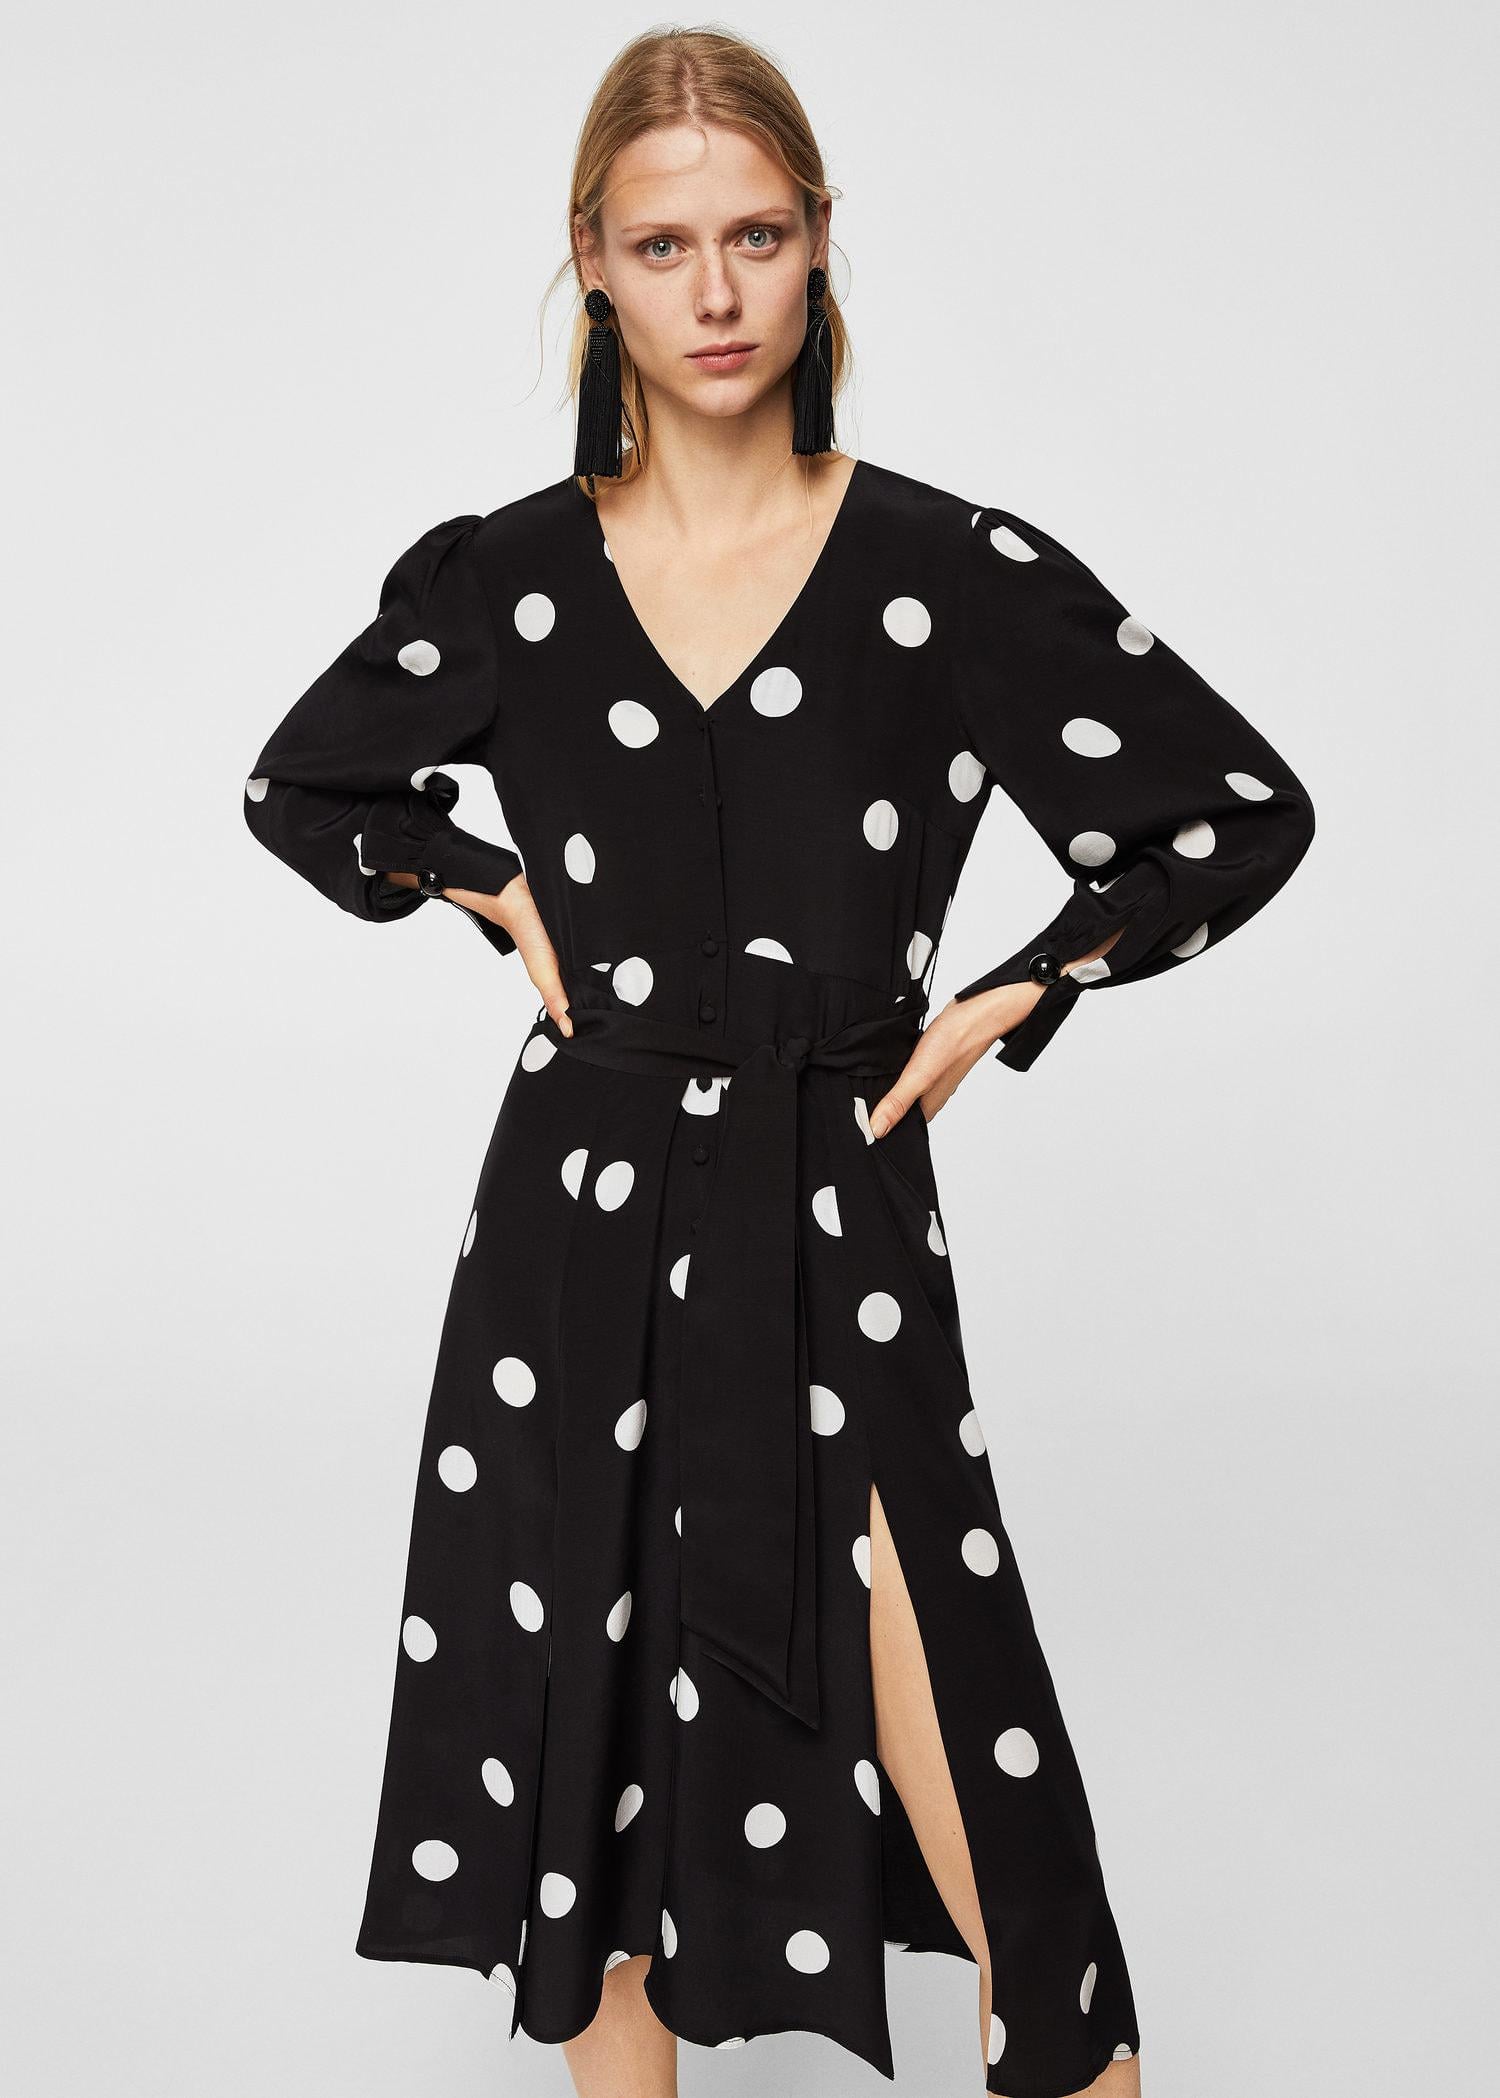 mango polka dot print dress